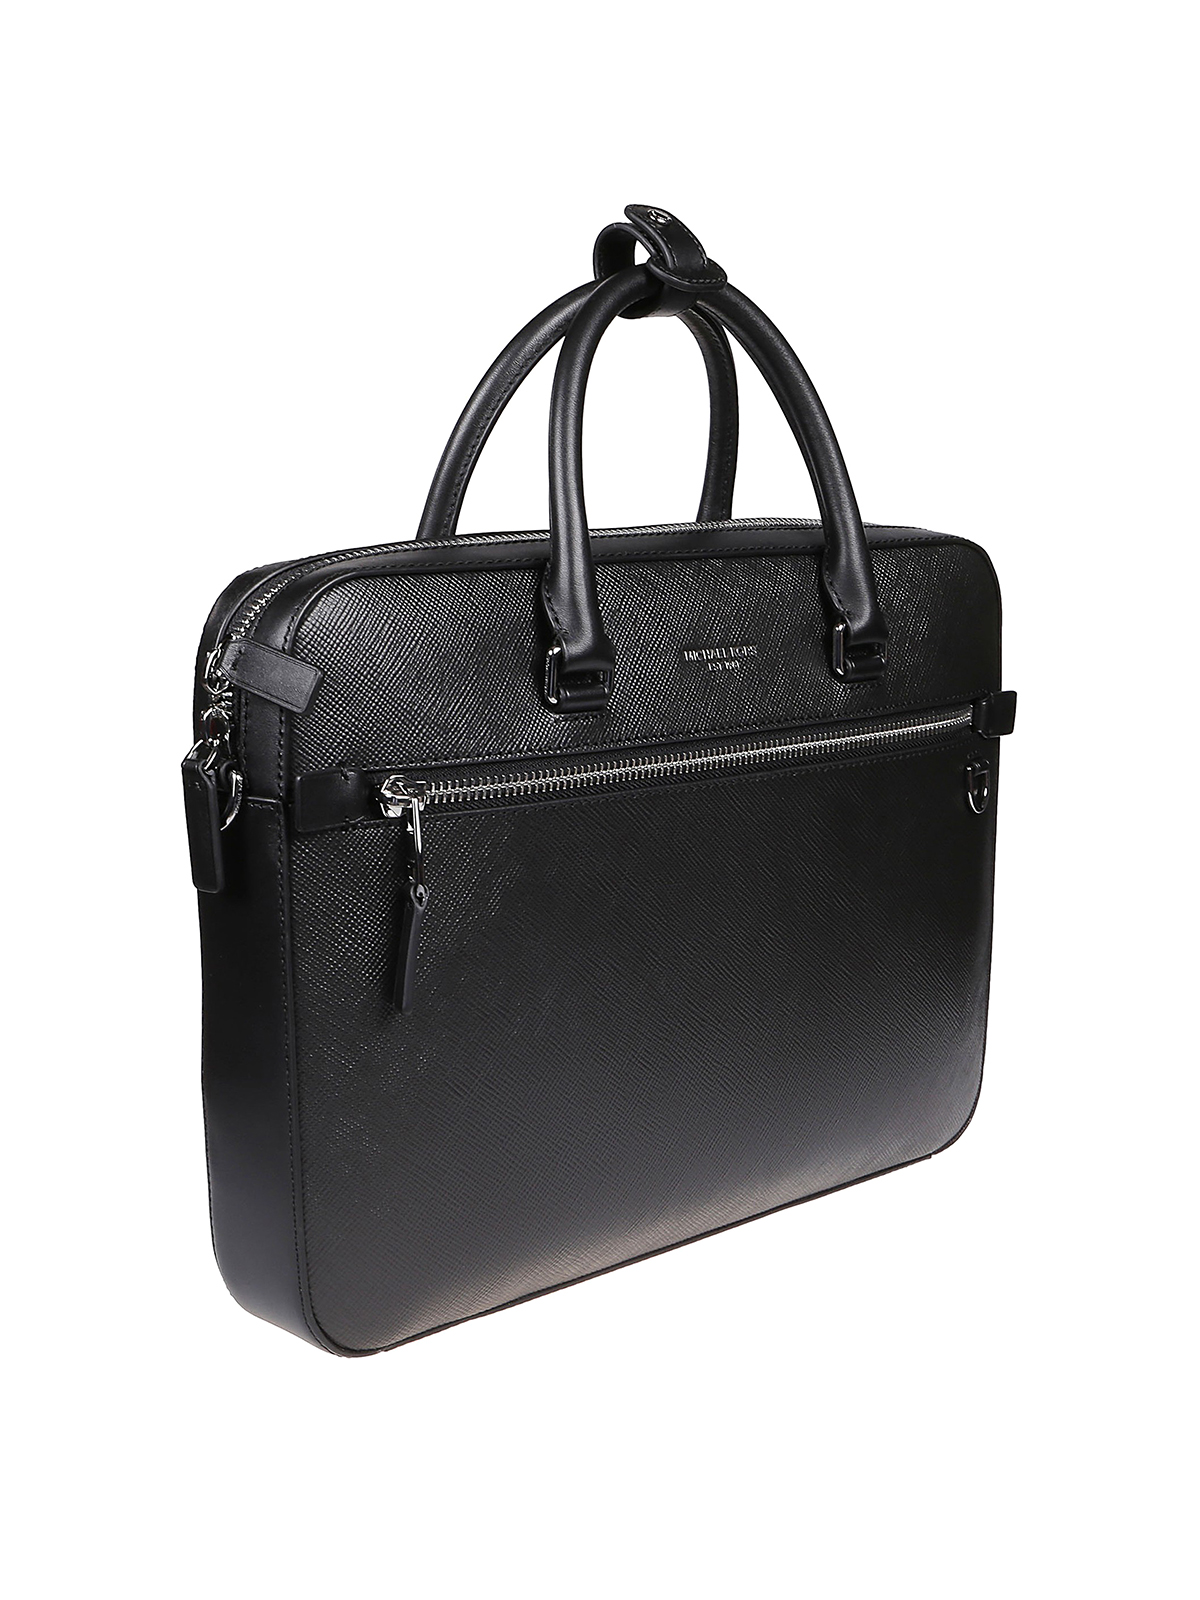 michael kors handbags with laptop compartment